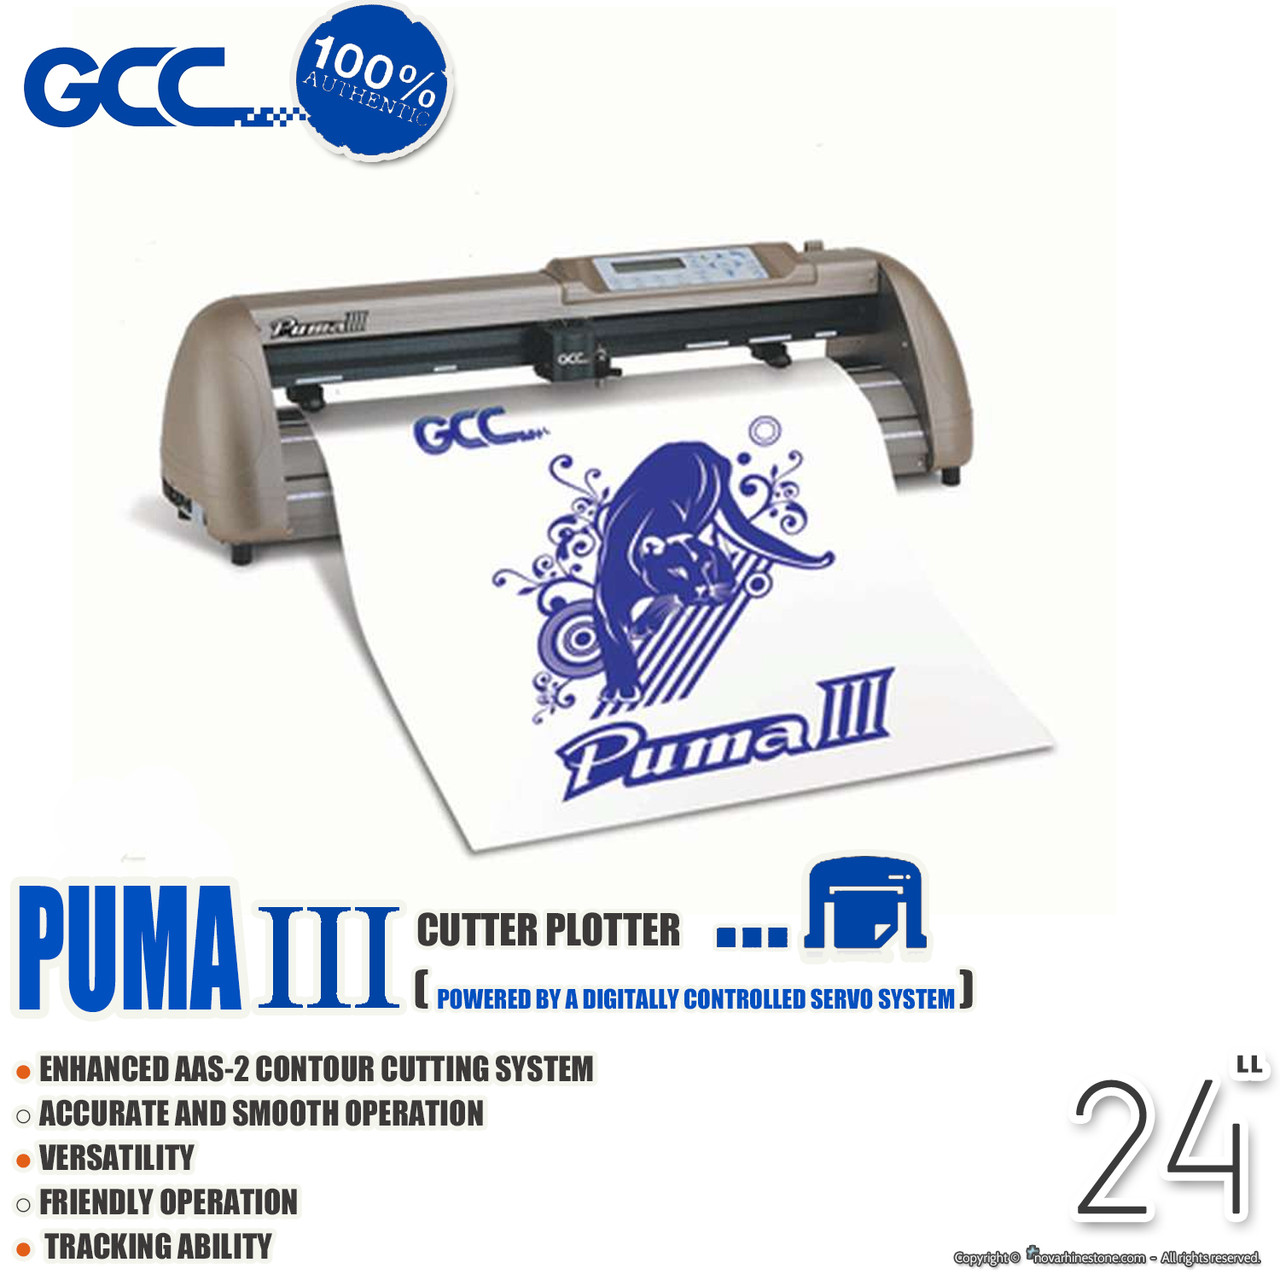 gcc puma iii vinyl cutter